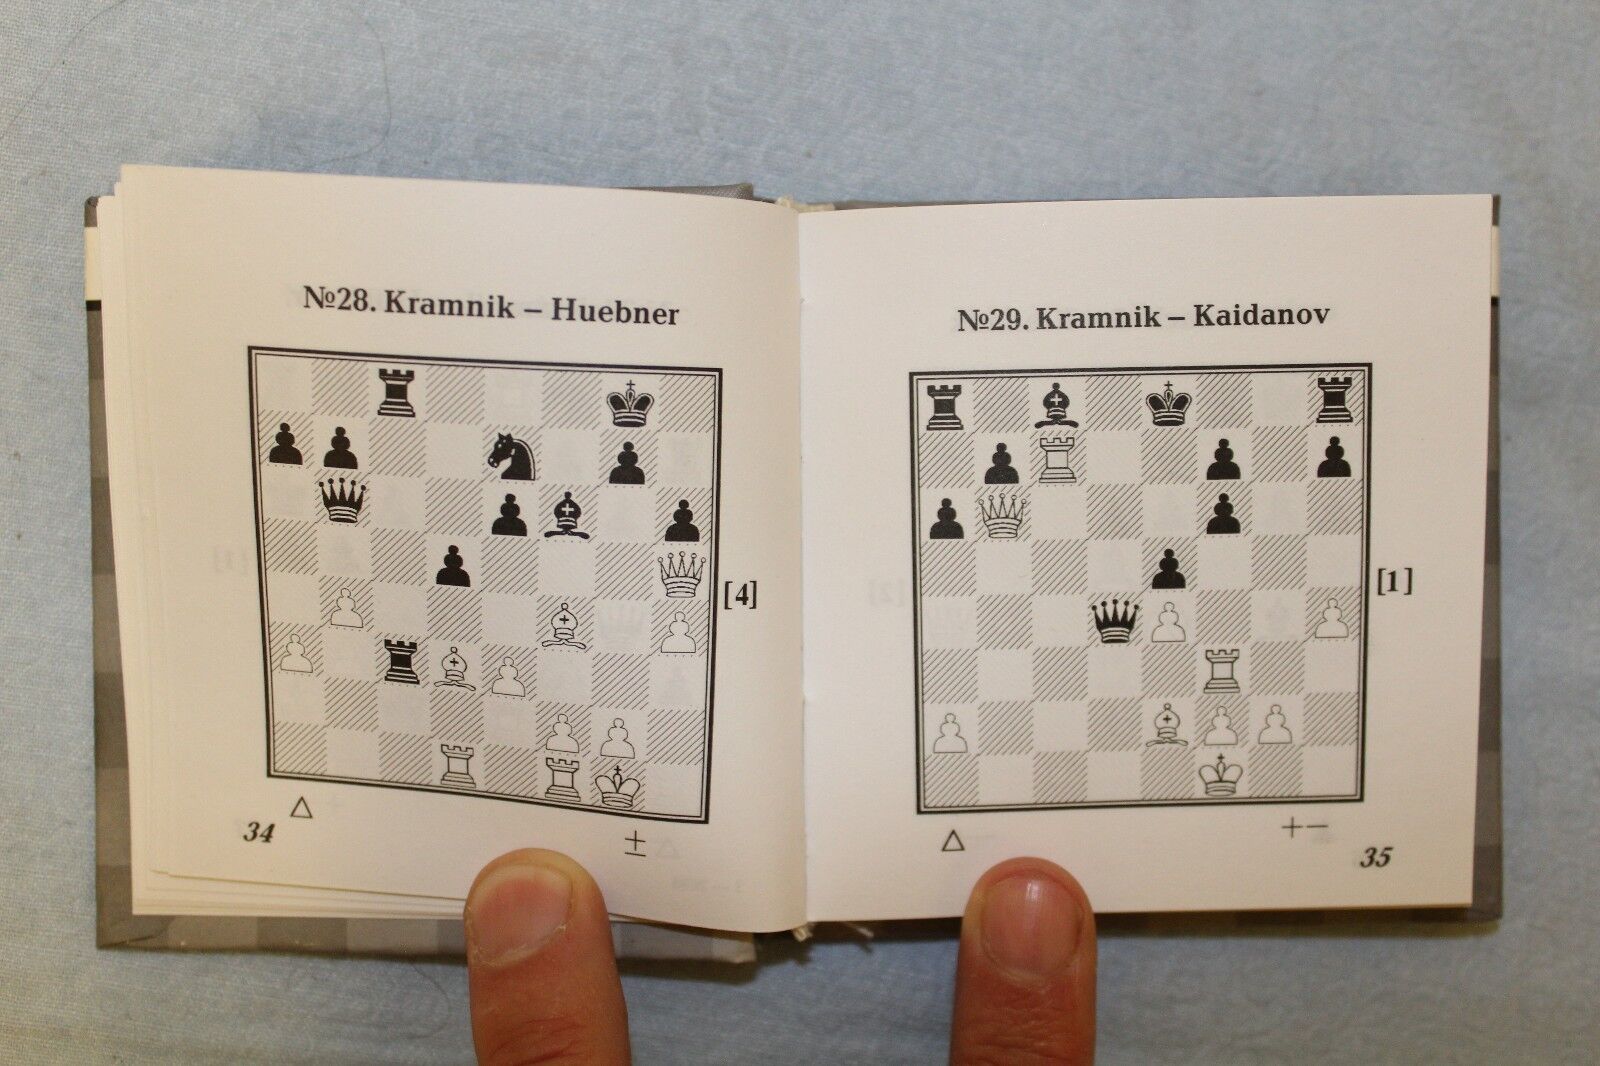 11170.Chess Minibook: A.Kalinin. Vladimir Kramnik. Great Chess Combinations. 2011